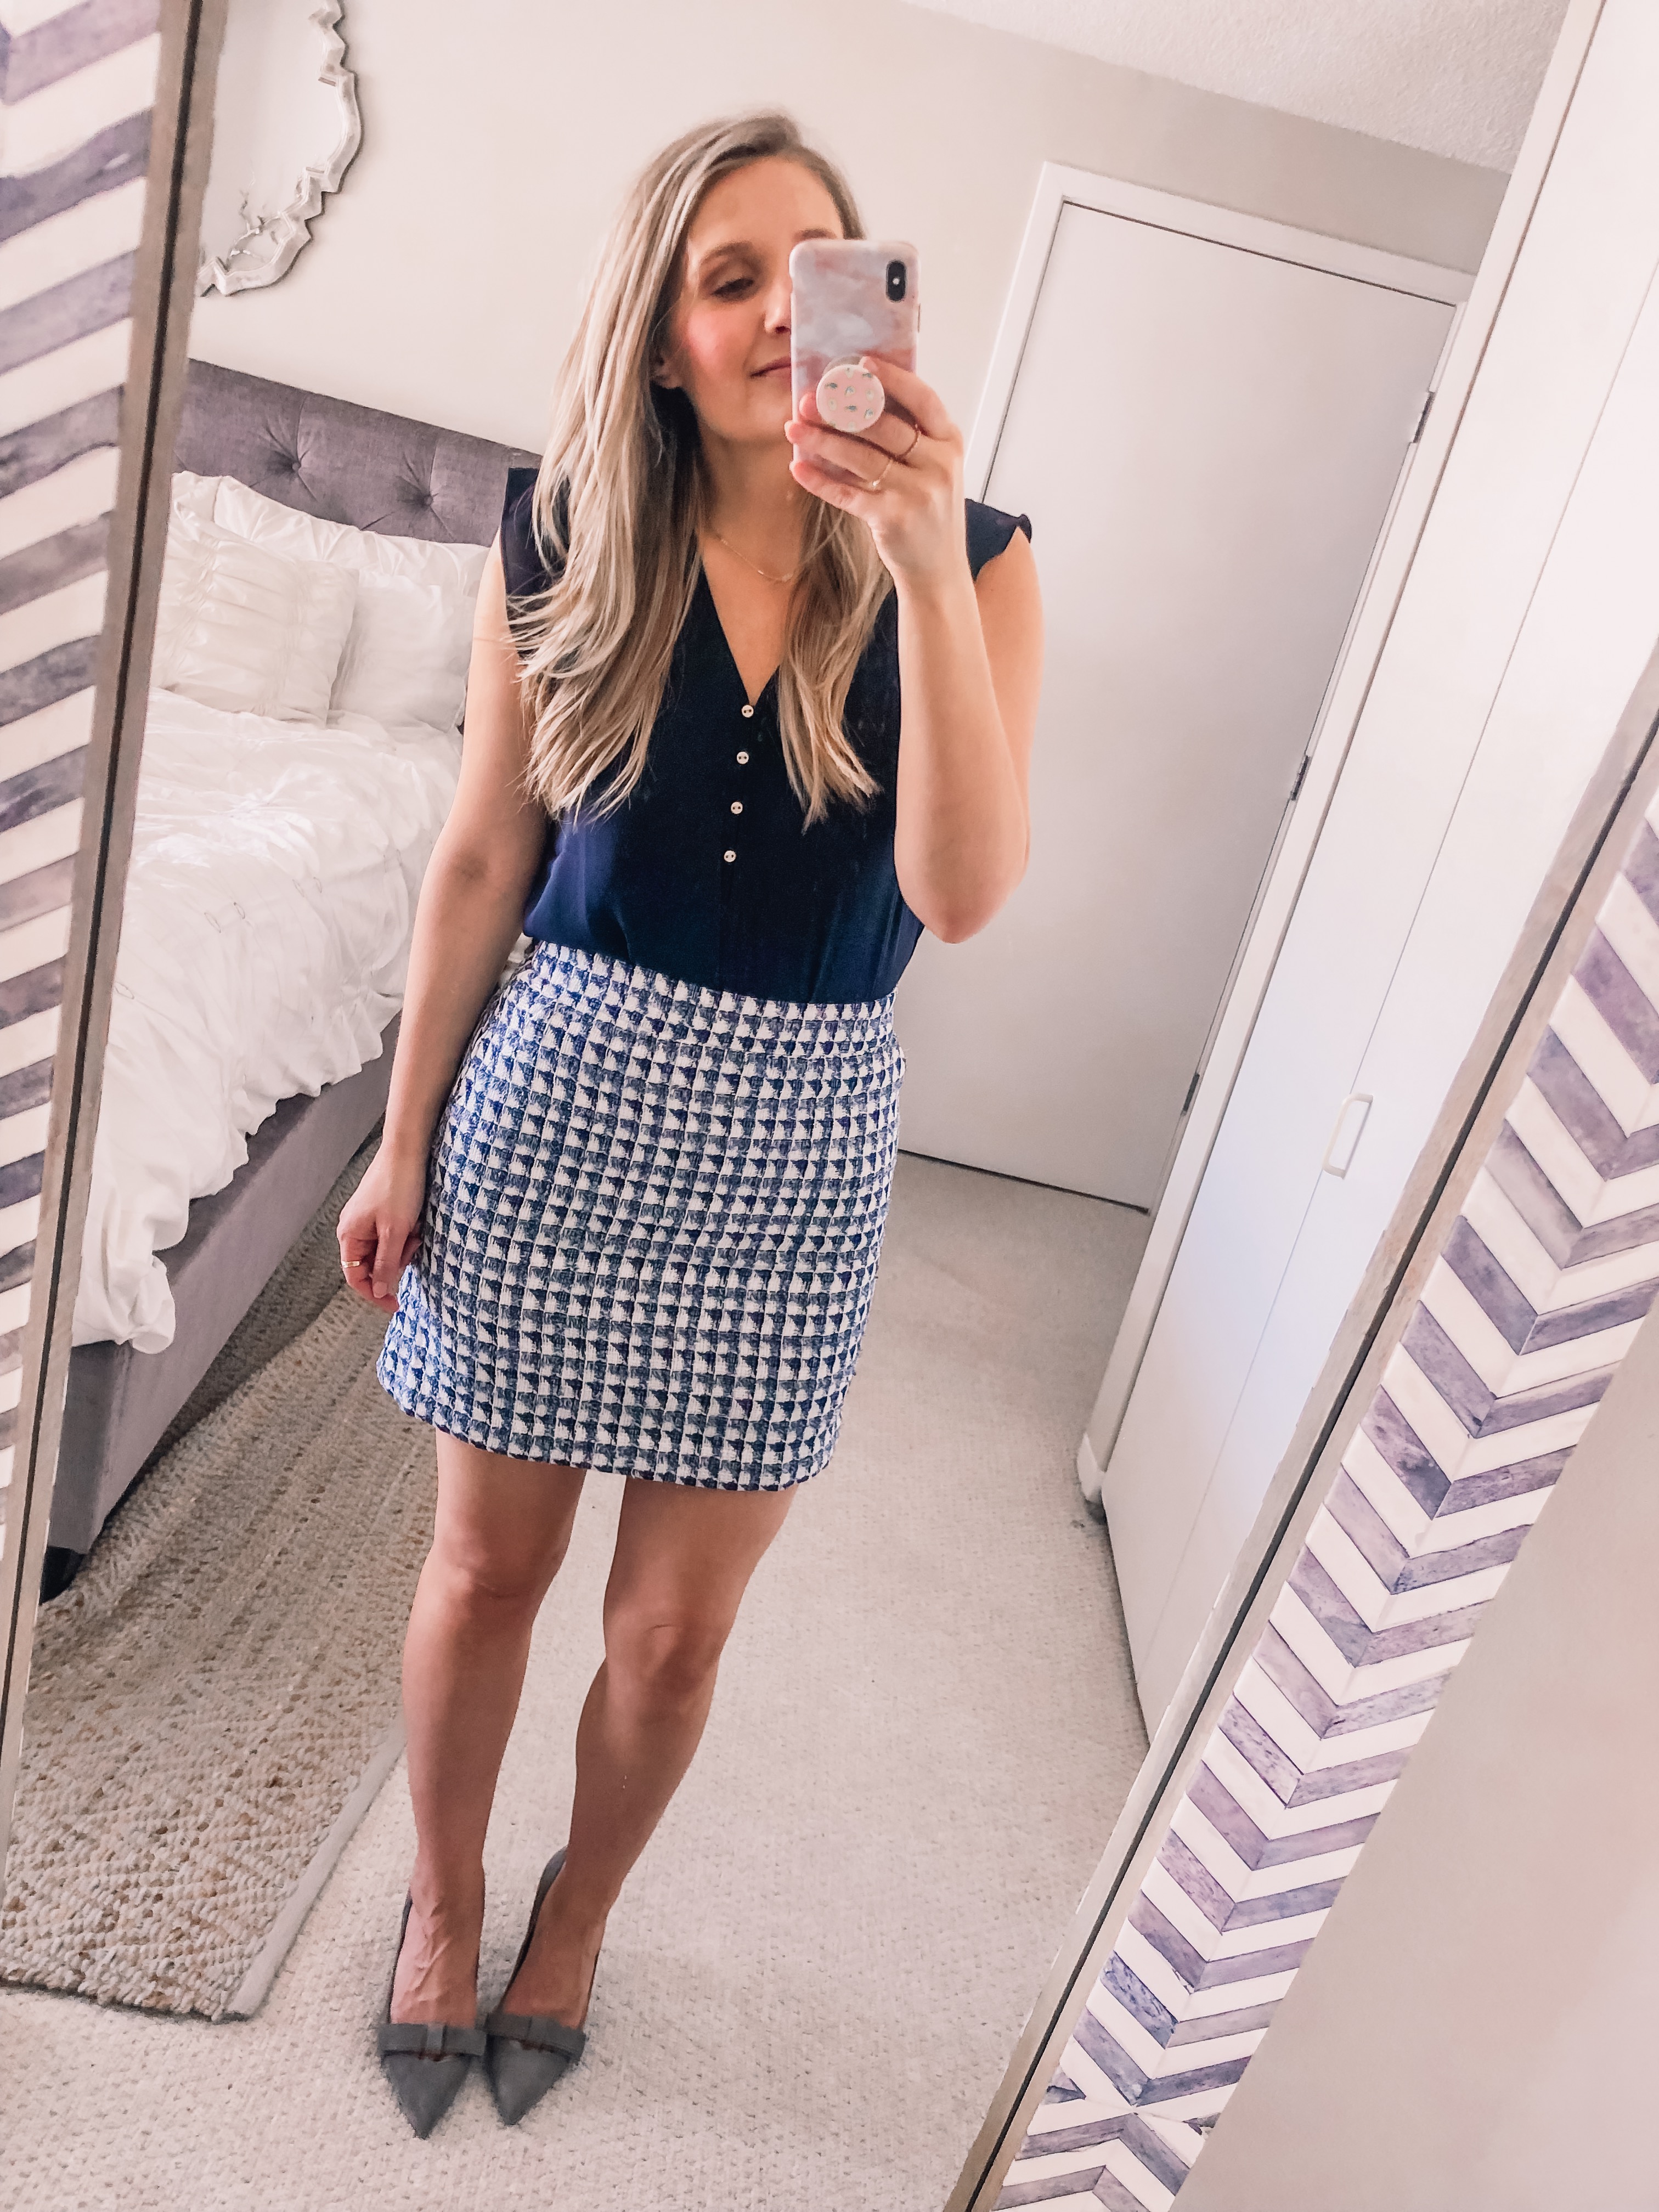 blue geometric print tweed skirt from the loft sale